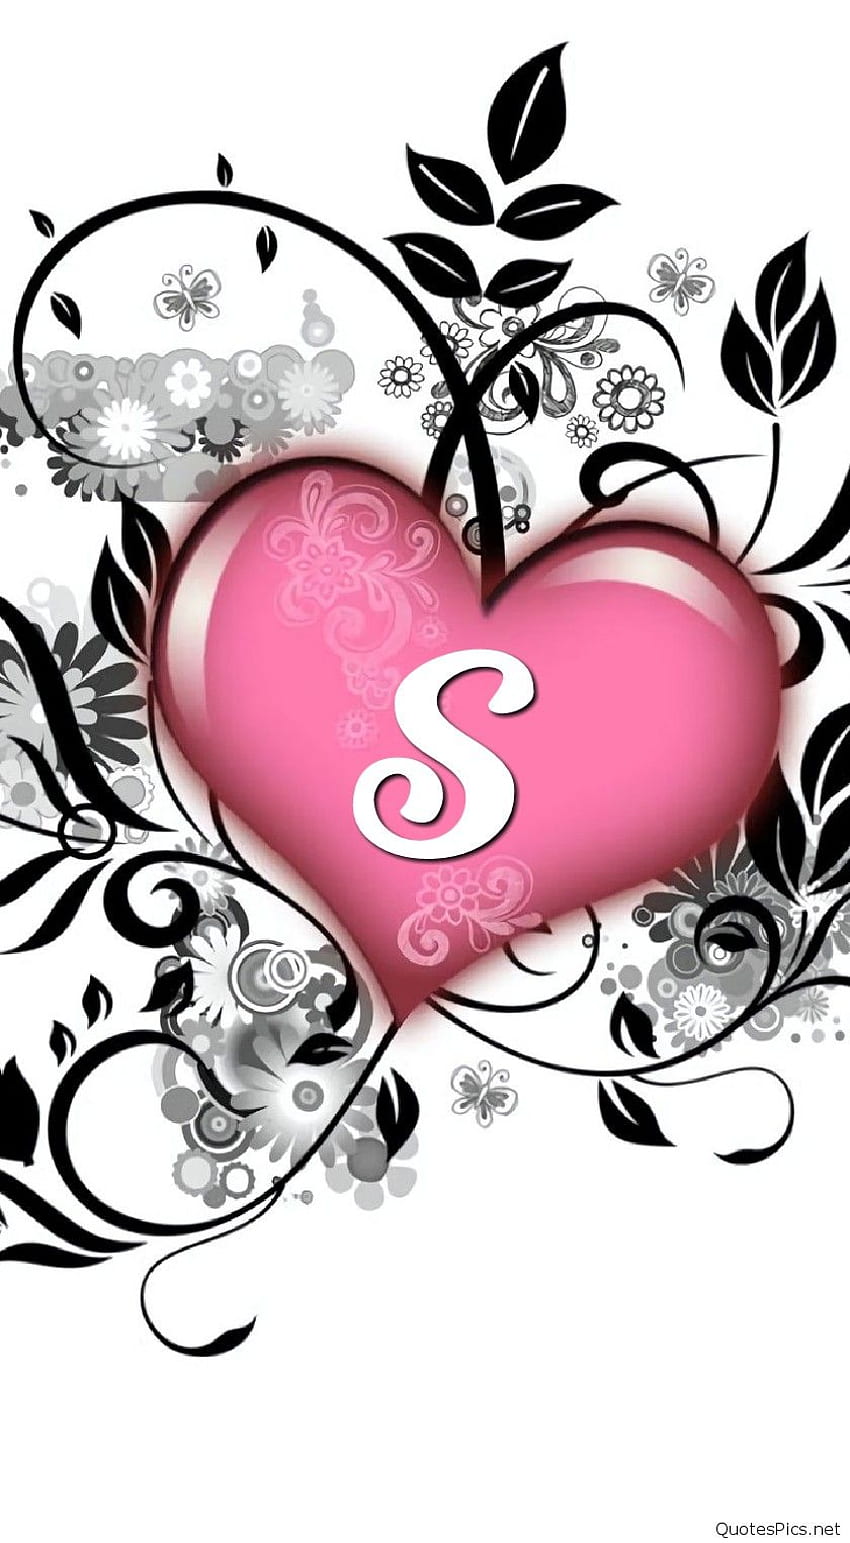 S Letter For Facebook 2 - Letter S In Love - & Background, S ...